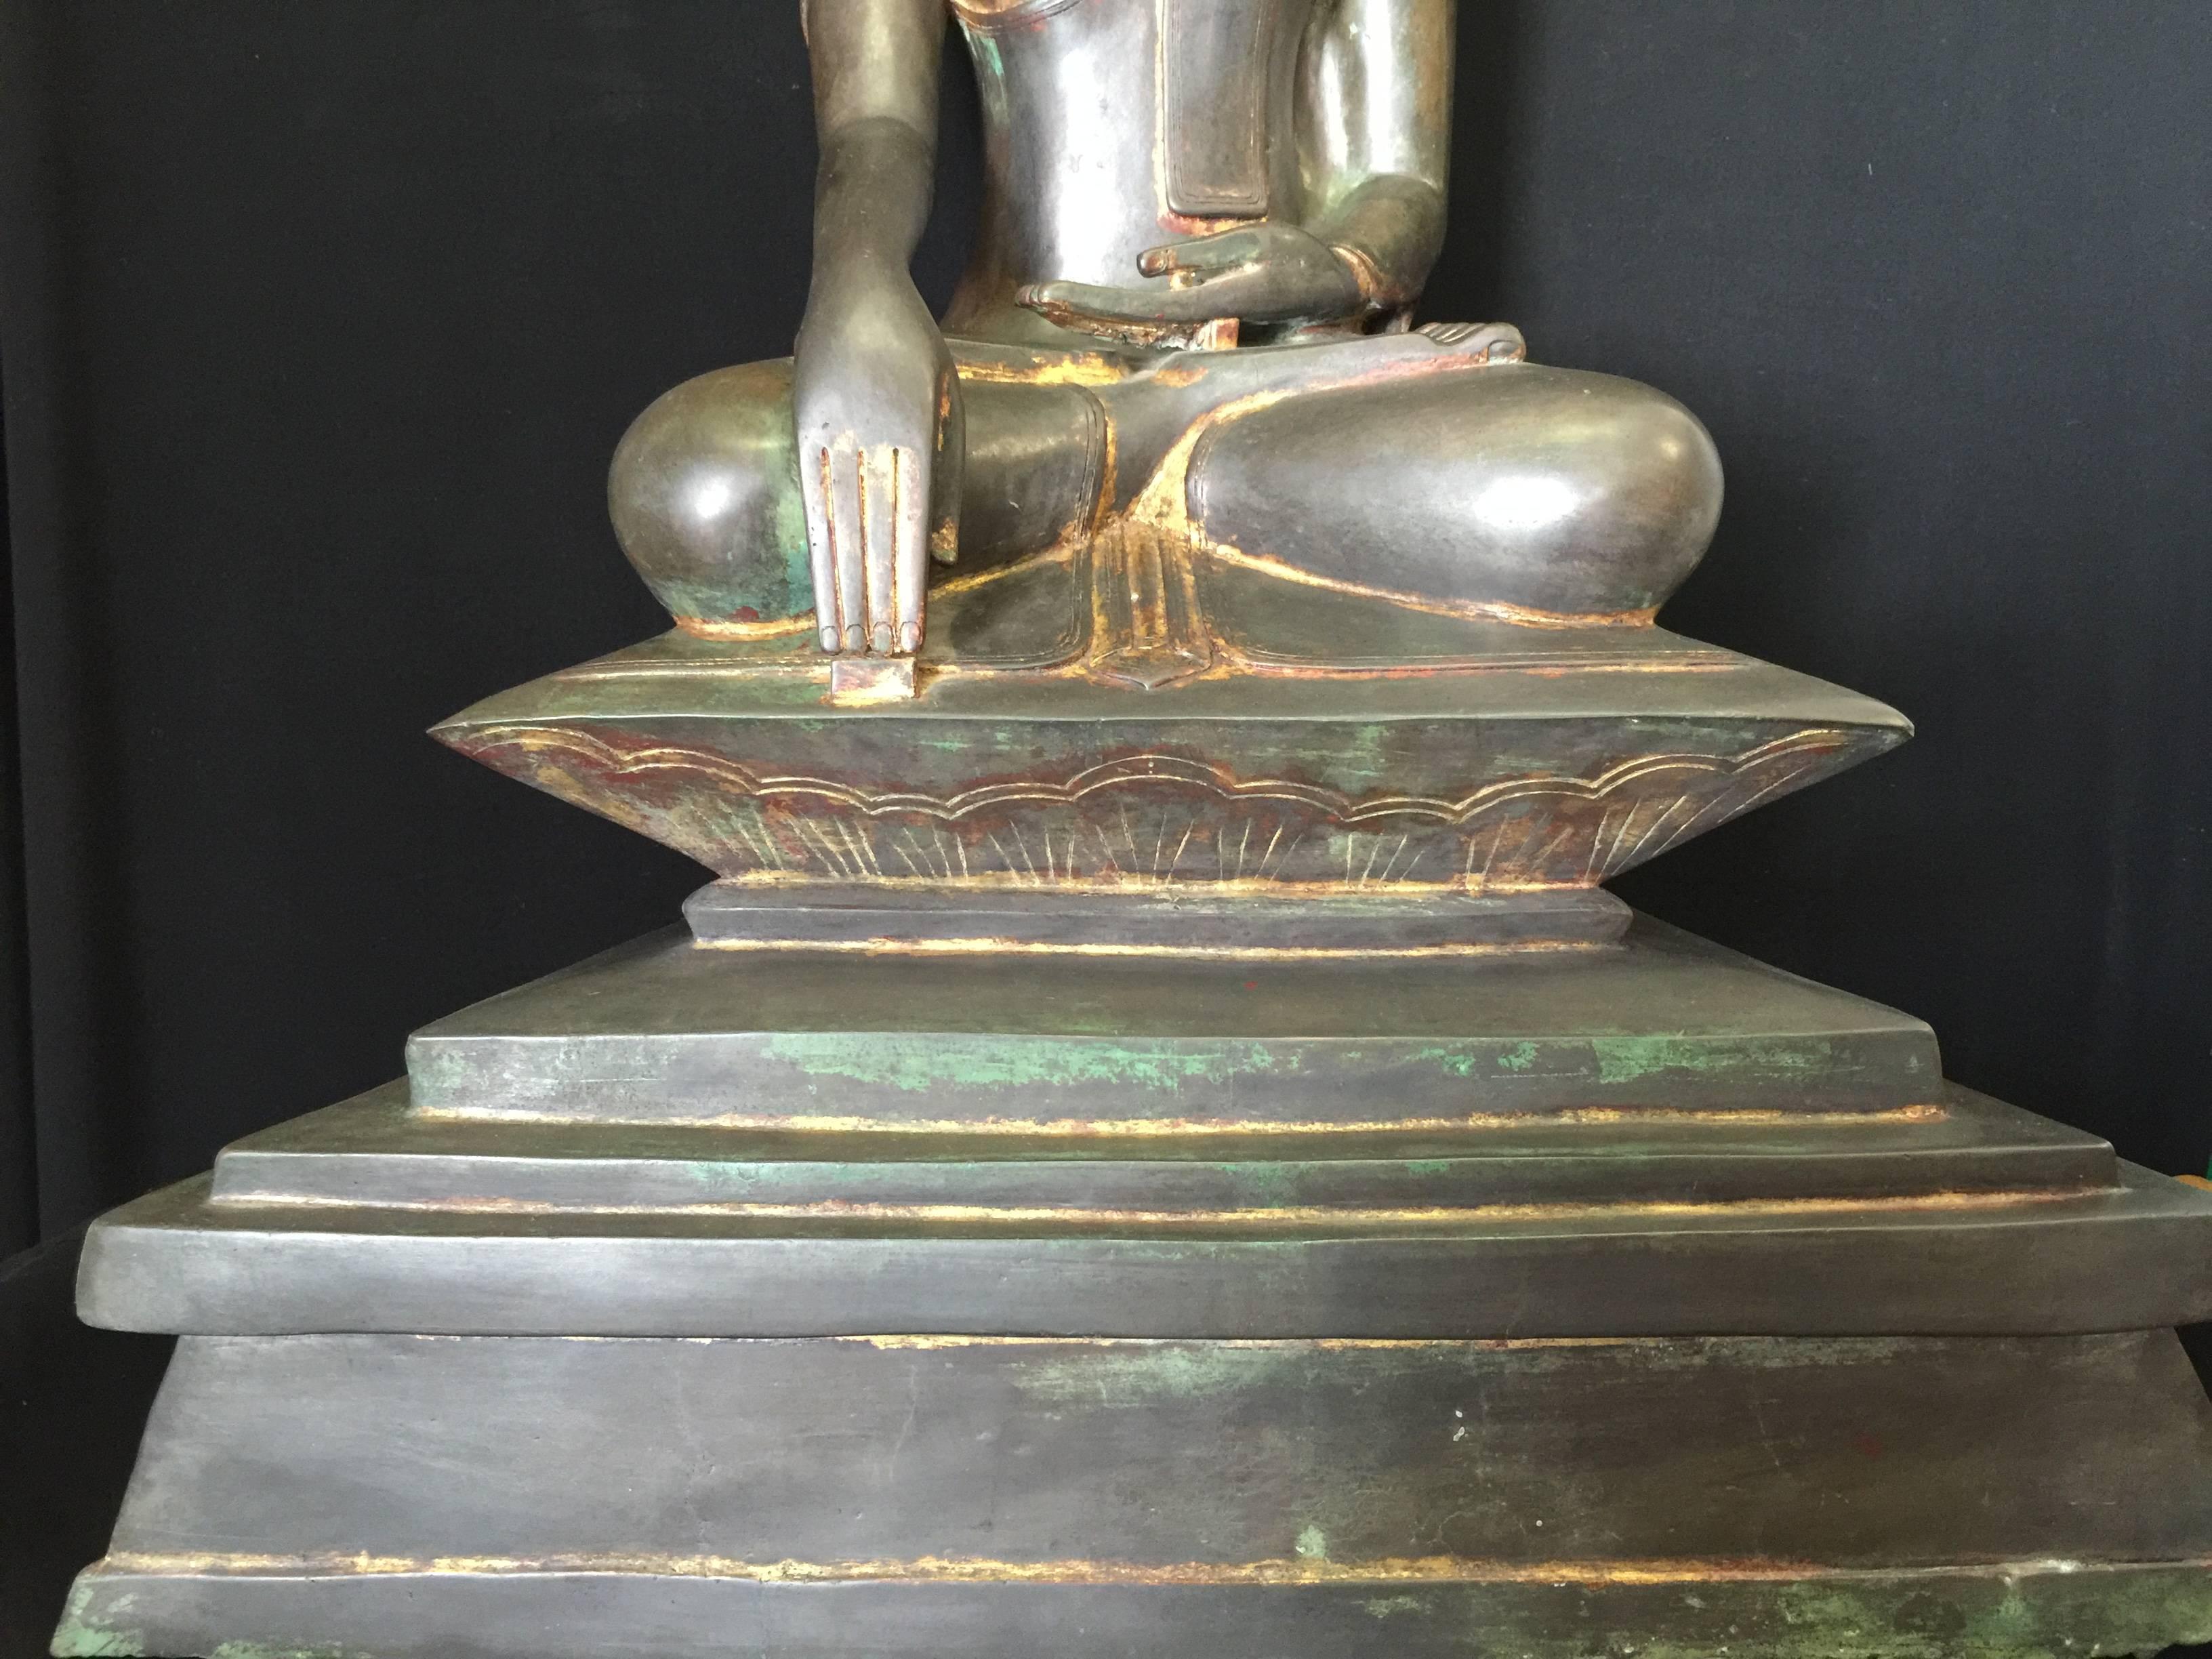 Very large and beautiful sitting Awa (Tai Yai) bronze Buddha from Burma. This dark brownish Buddha is sitting on a large impressive throne in a 